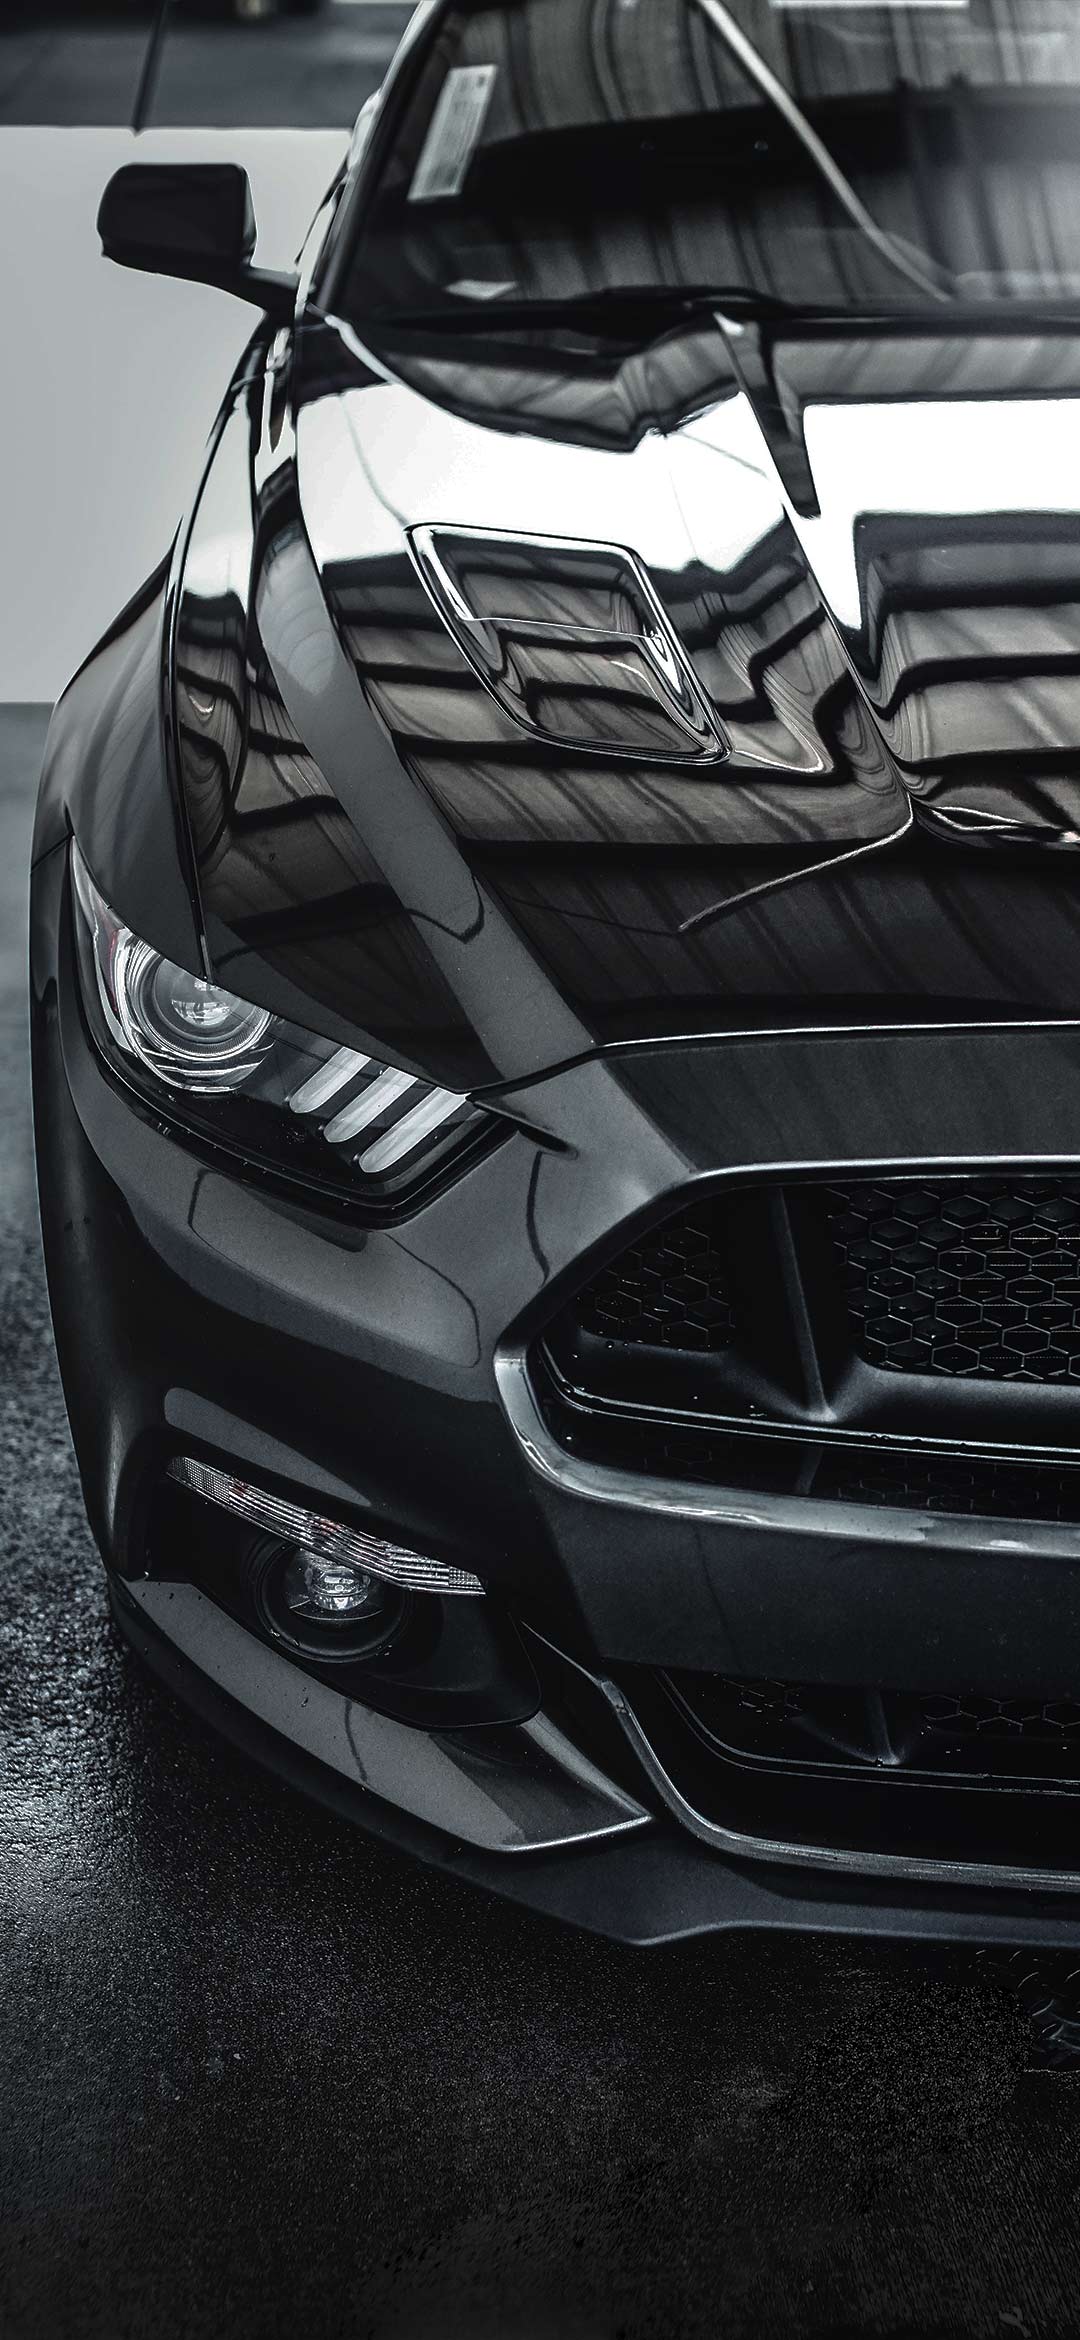 Black Mustang car front wallpaper